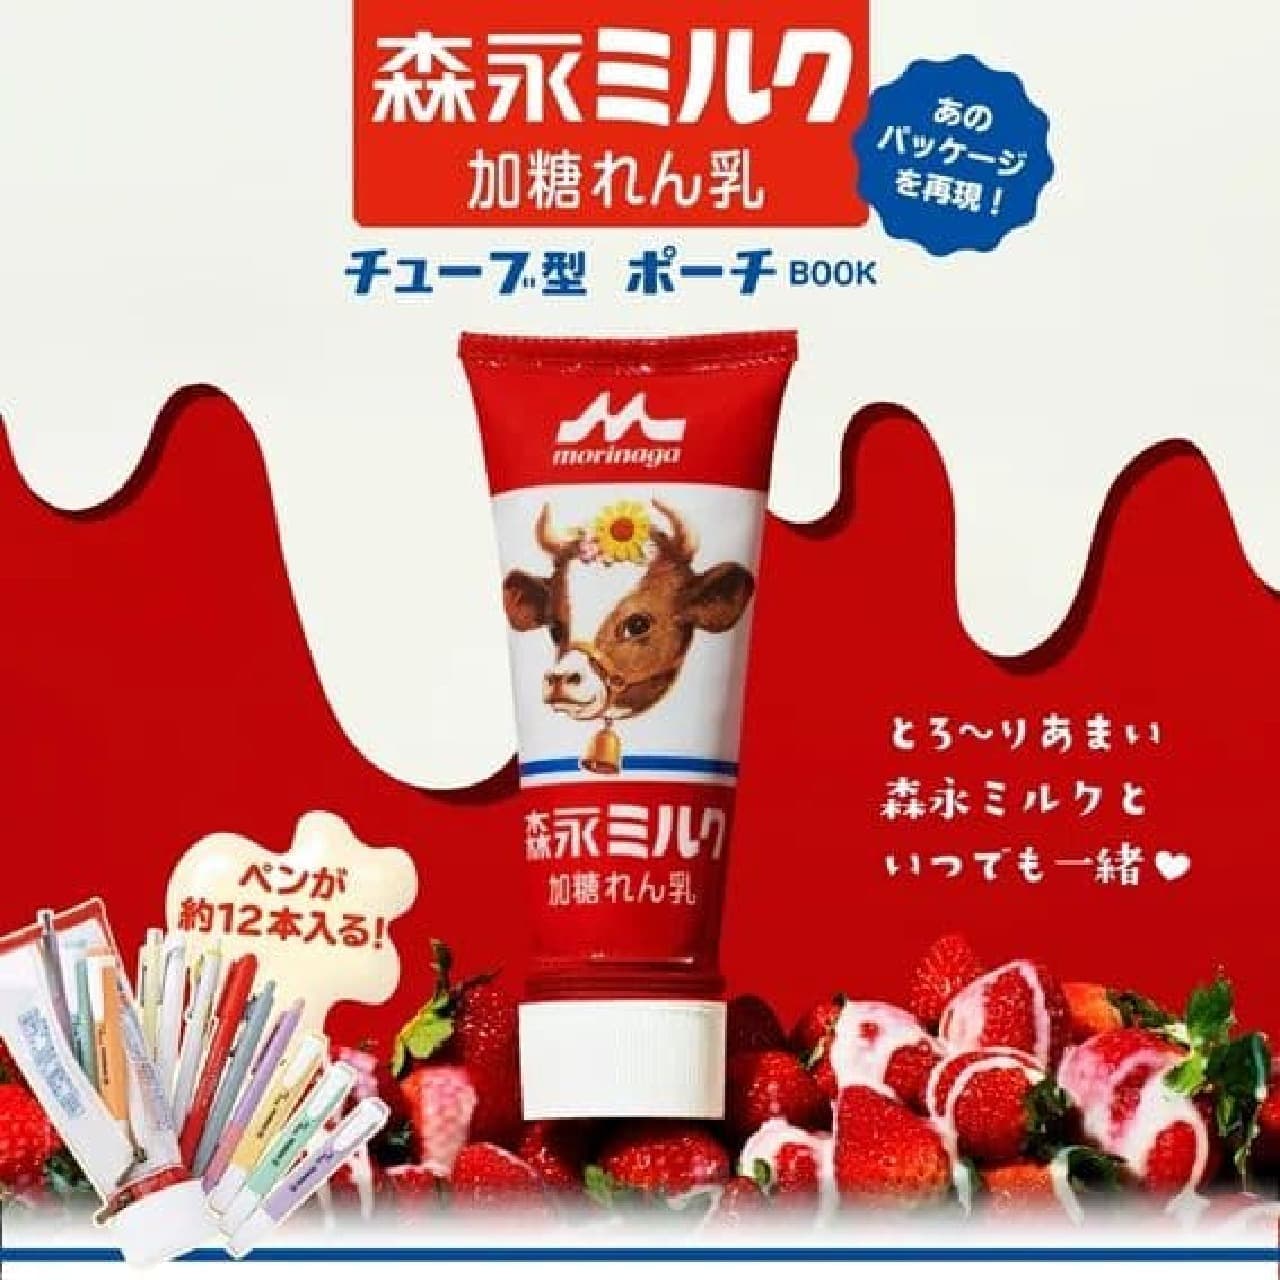 Morinaga Milk: Molten Sugar Renmilk Tube-Shaped Pouch Book" by Takarajimasya